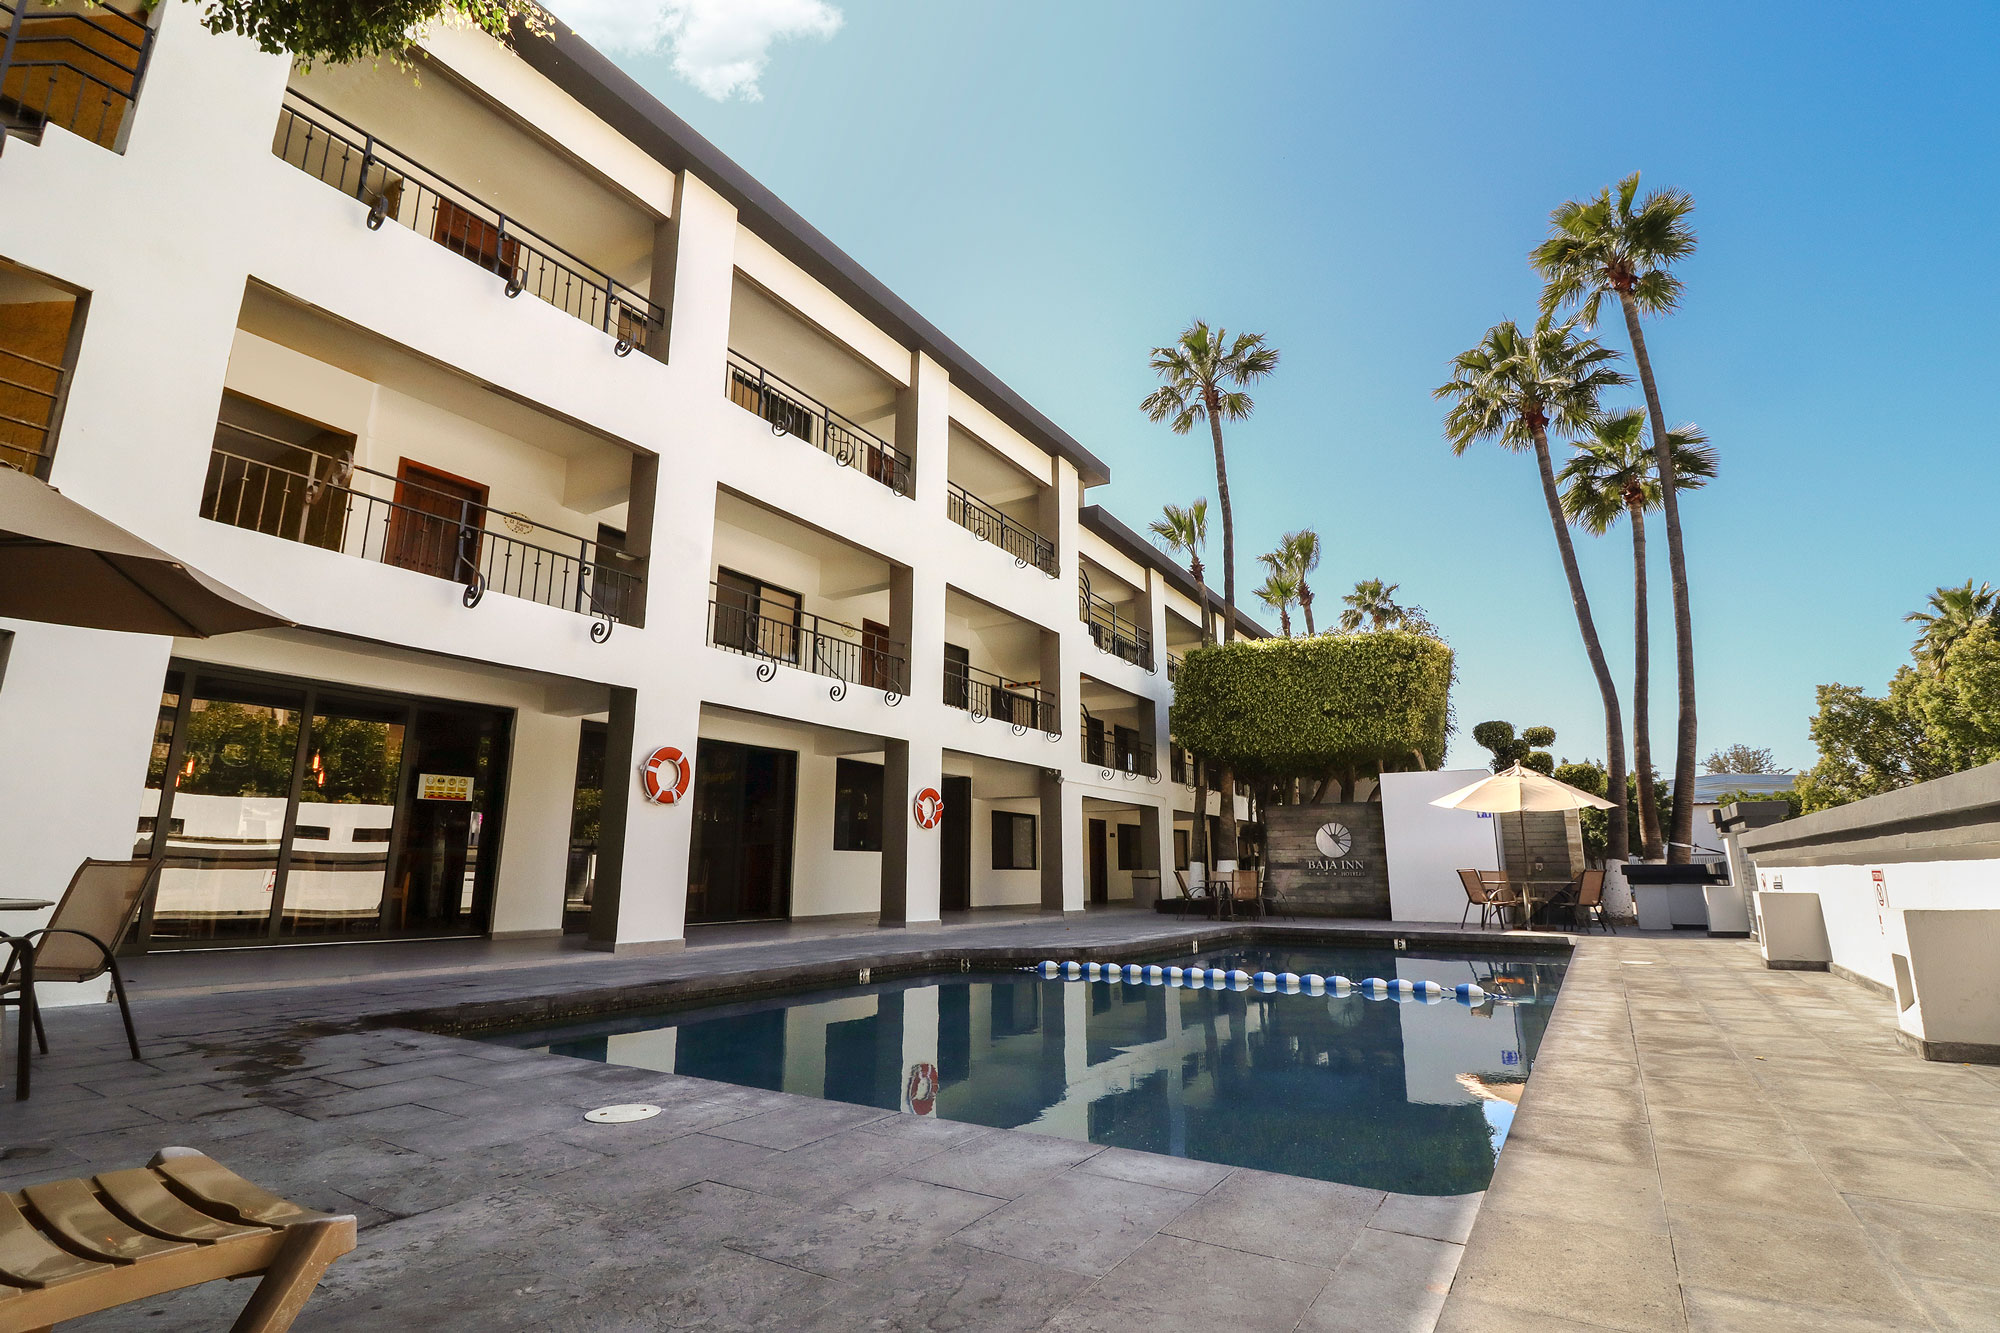 Baja Inn Hoteles – Hoteles en Tijuana y Ensenada